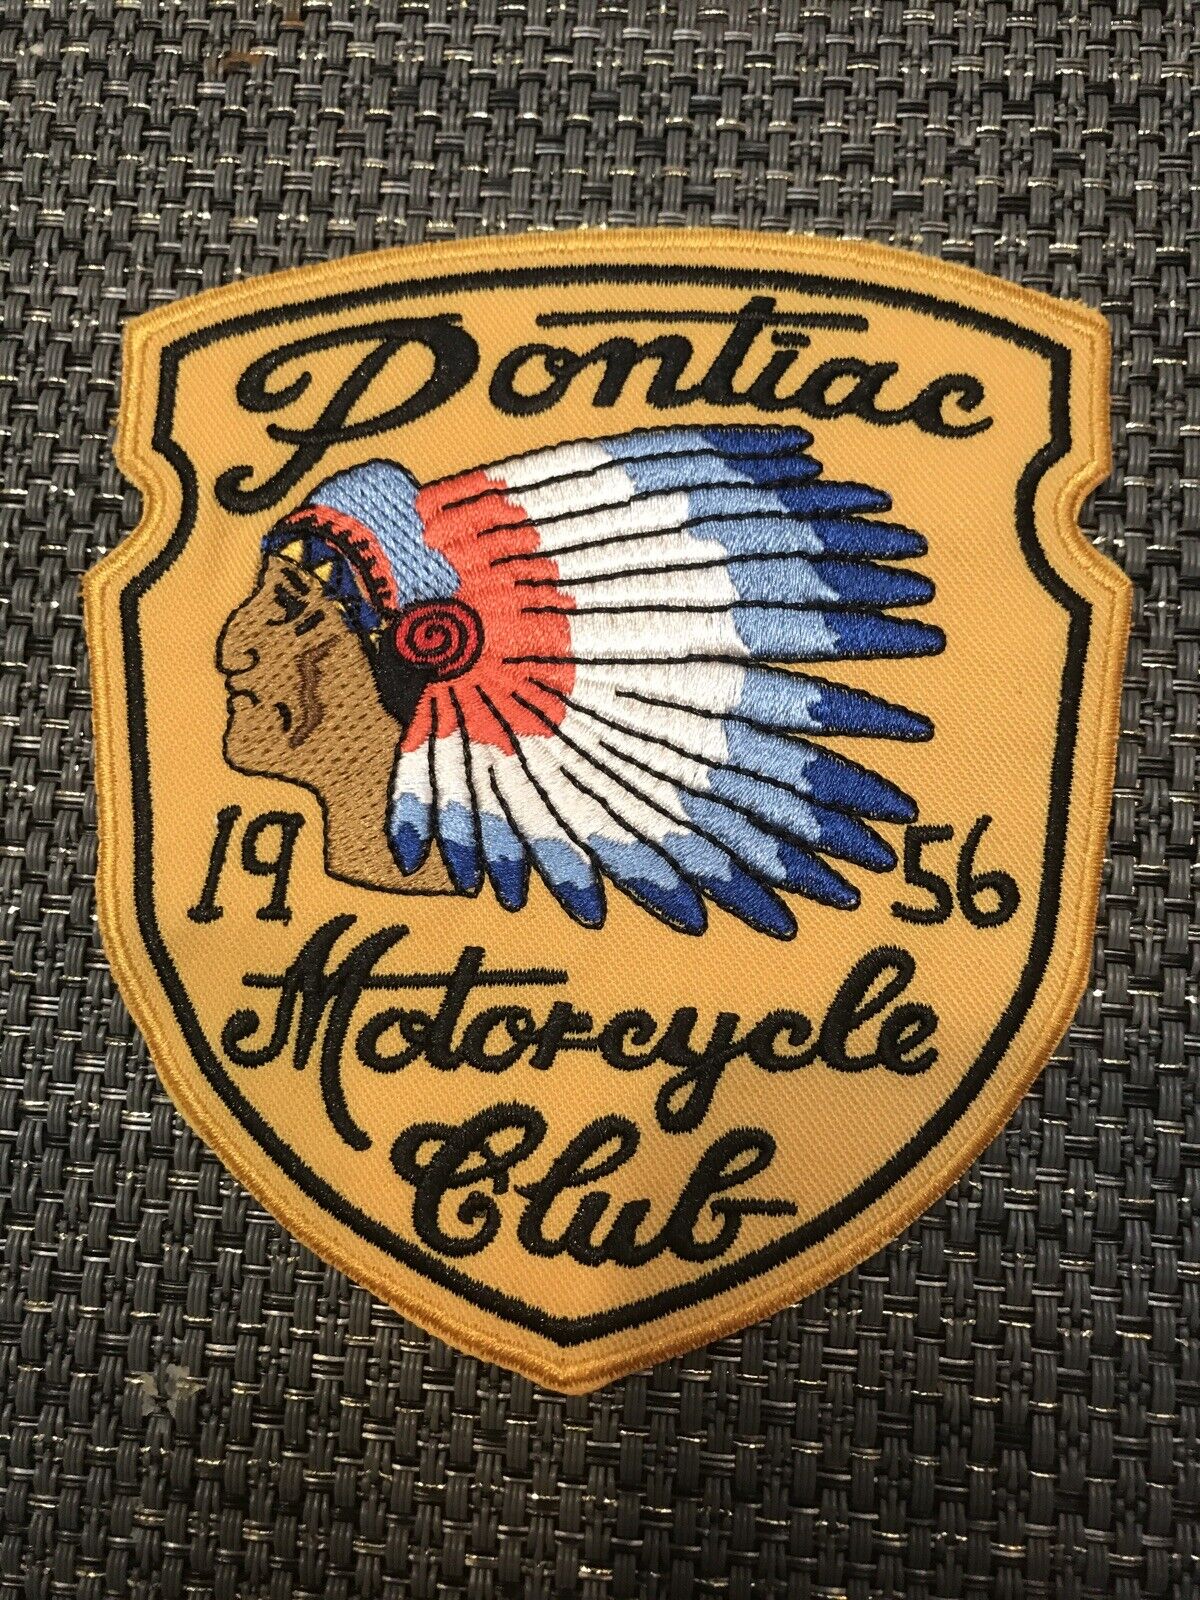 1956 PONTIAC MOTORCYCLE CLUB INDIAN CHIEF HOT ROD BIKER VEST PATCH